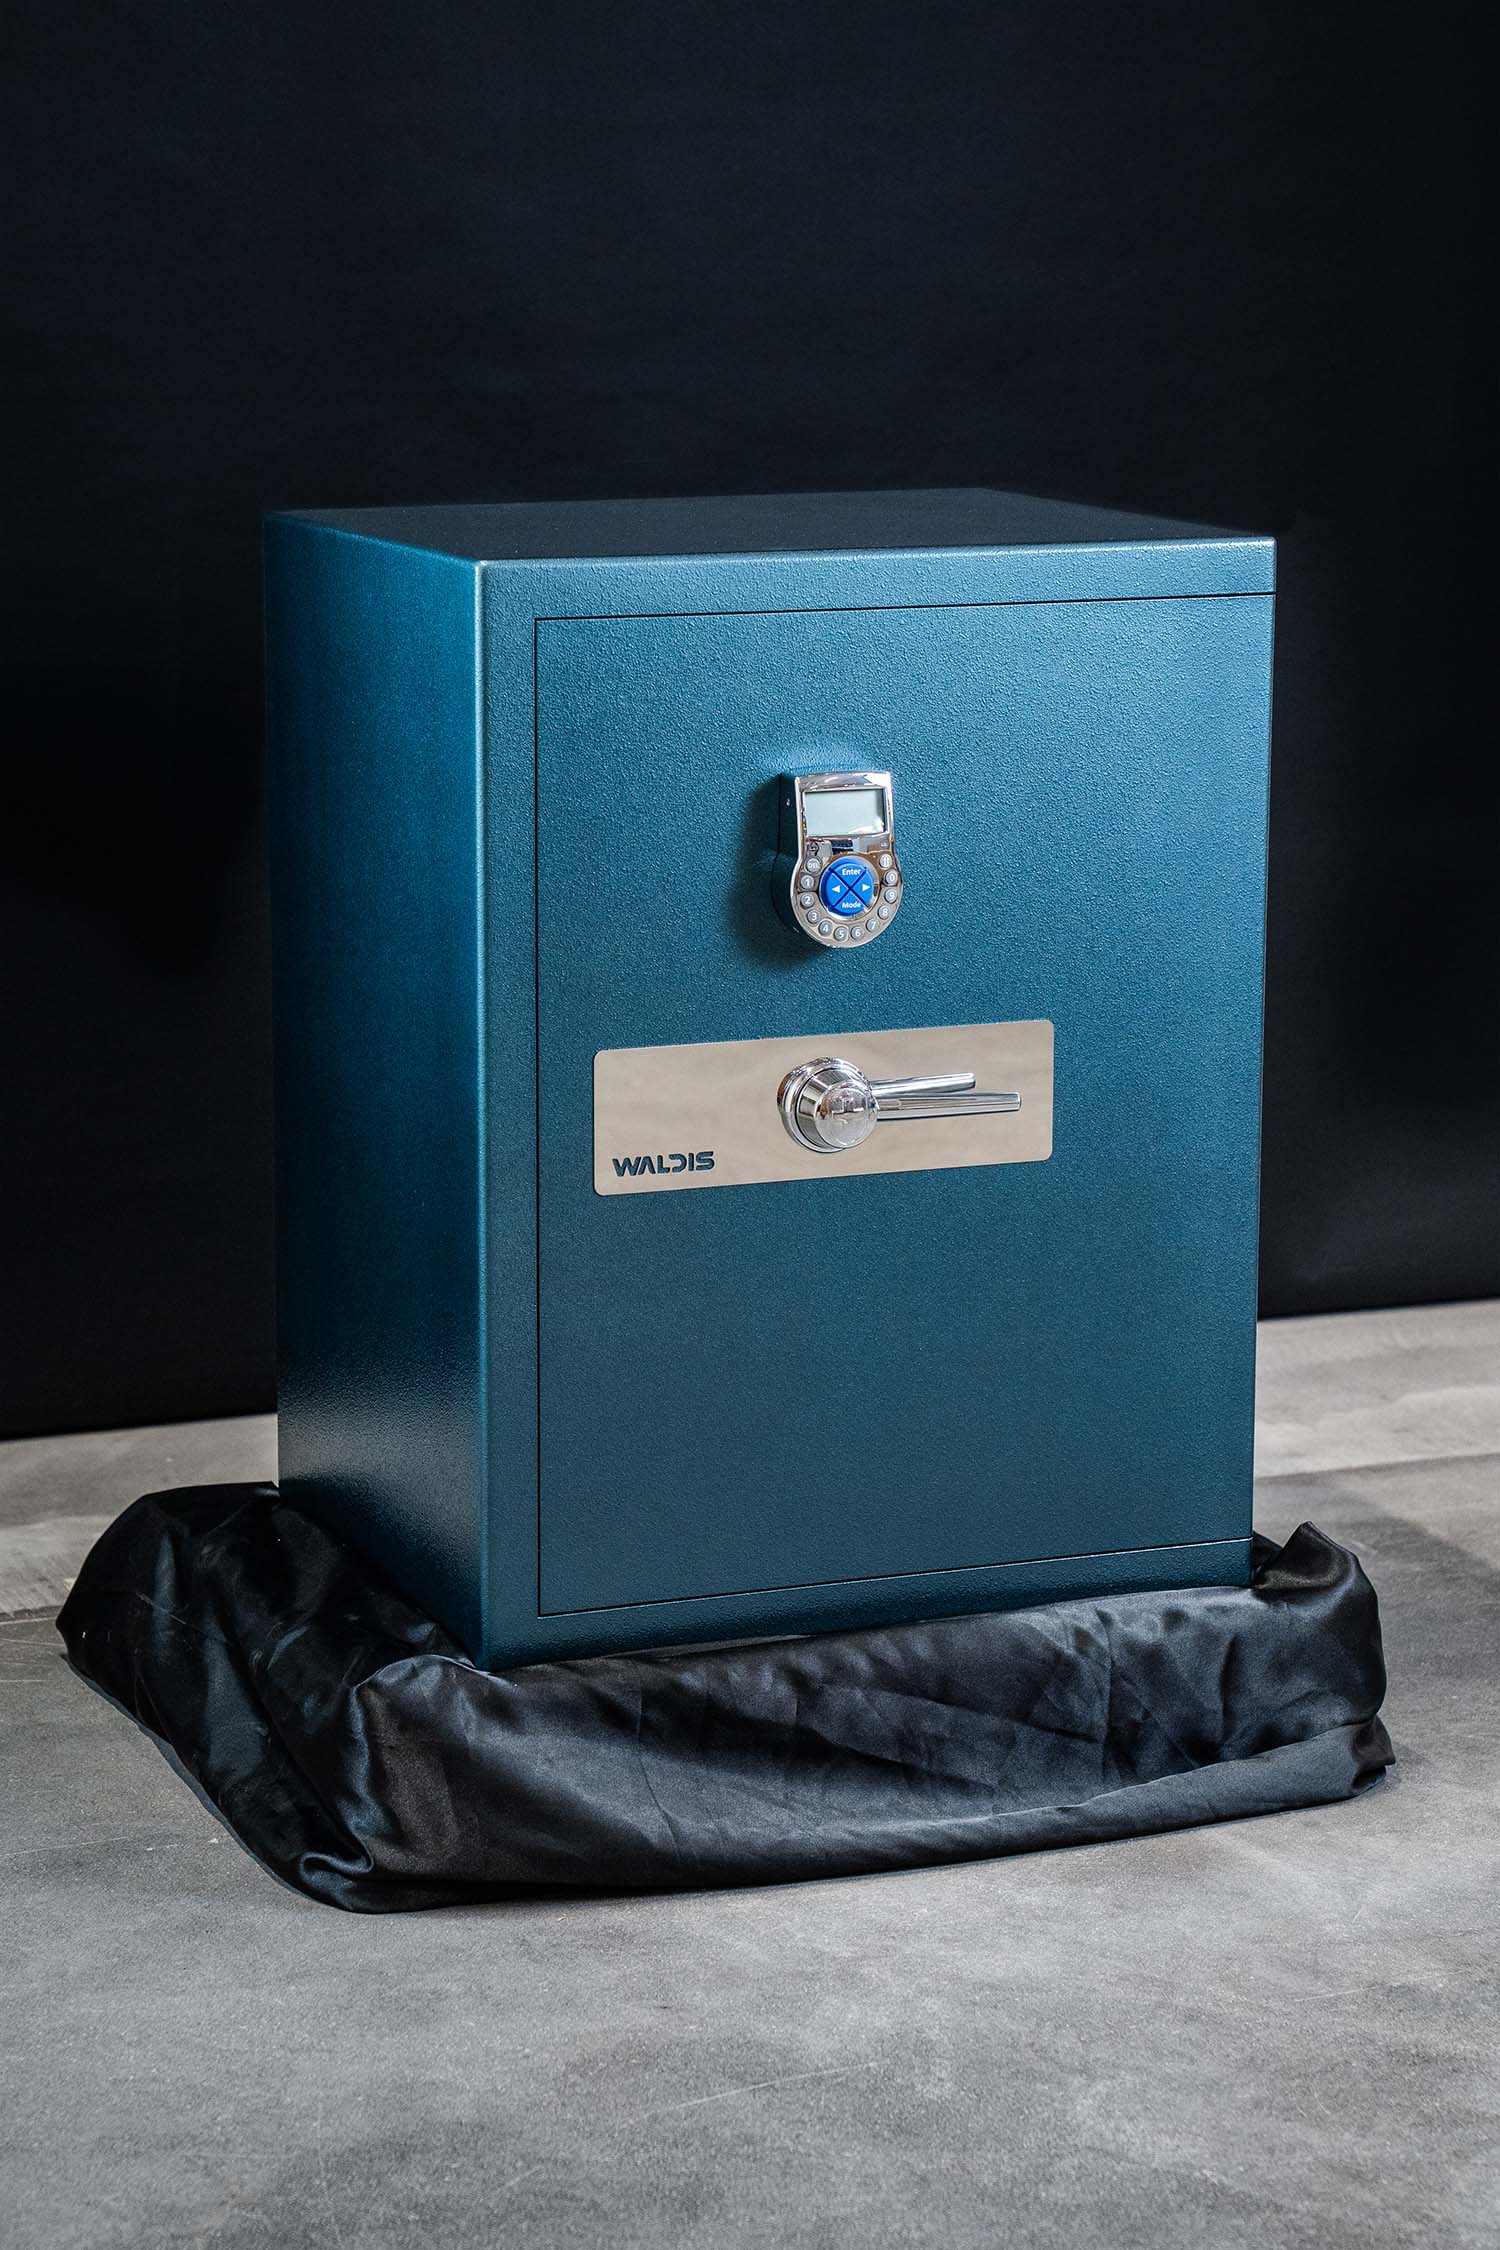 Waldis Tresor mit blauer metallic lackierung in bmw farbe